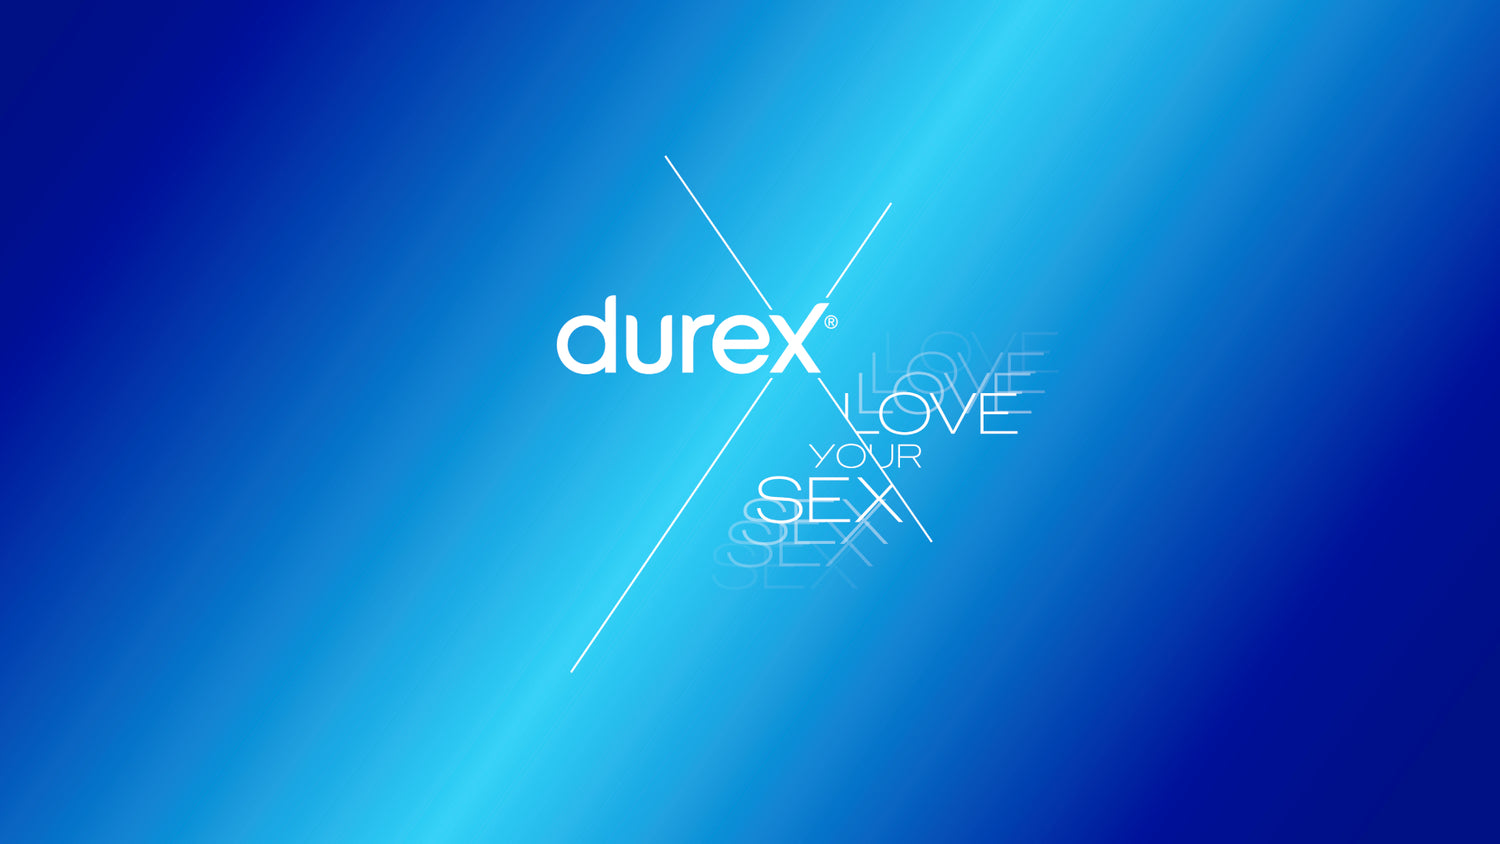 Durex - Love your sex